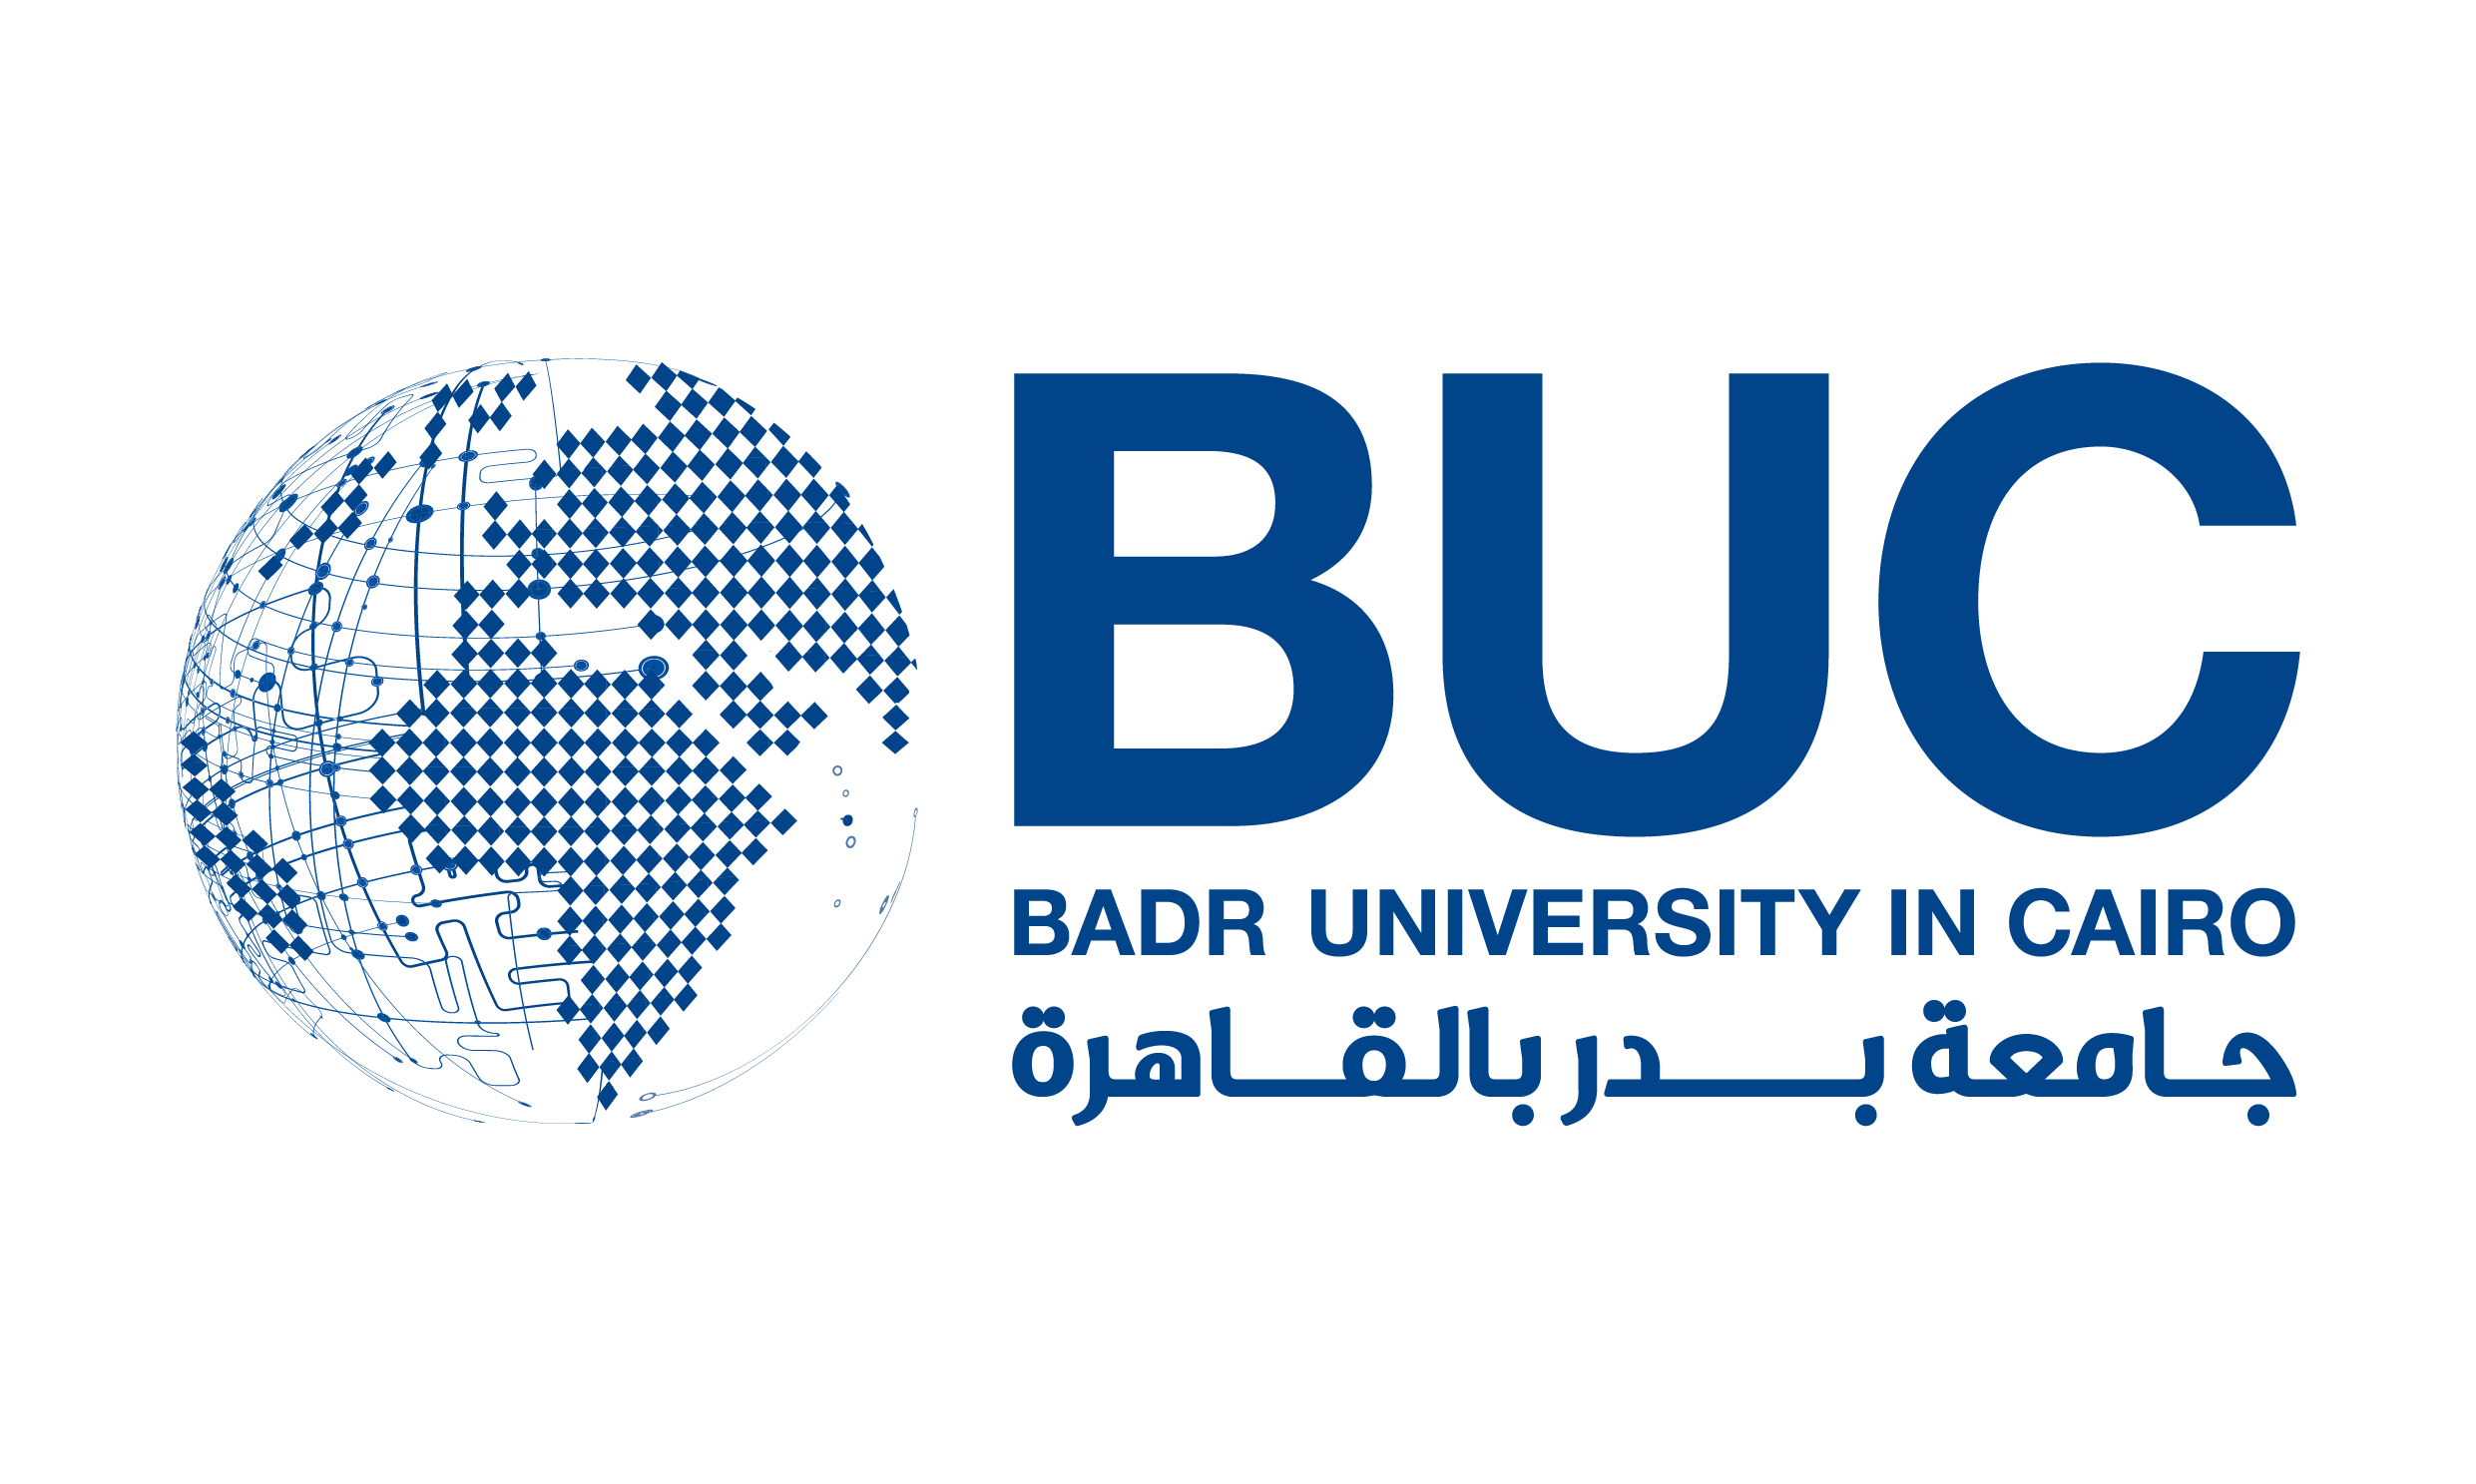 Badr university in Cairo